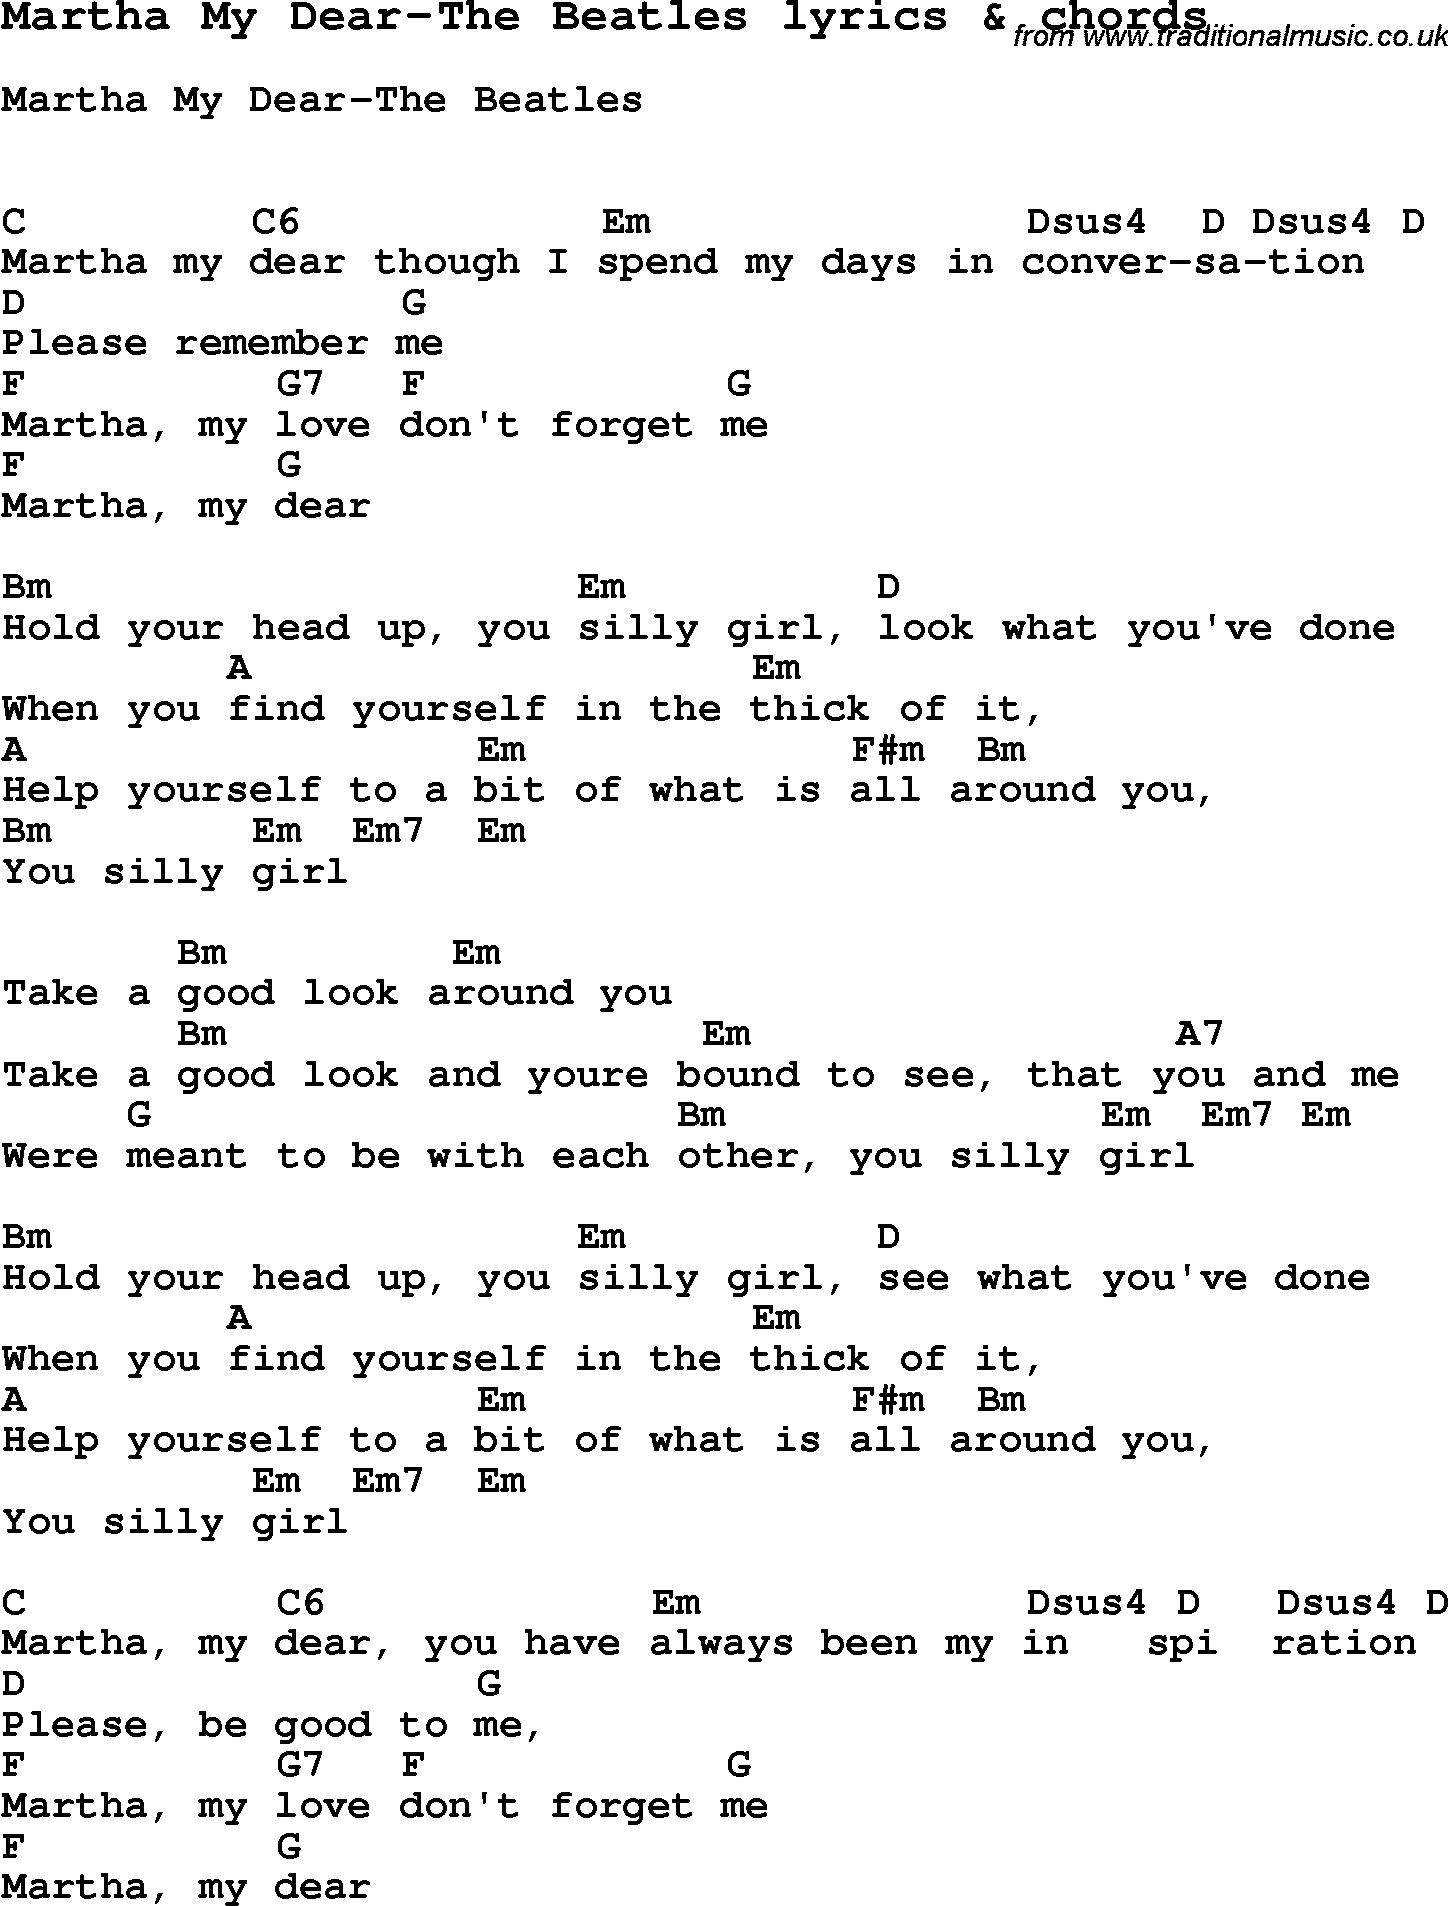 Love Song Lyrics for: Martha My Dear-The Beatles with chords for Ukulele, Guitar Banjo etc.